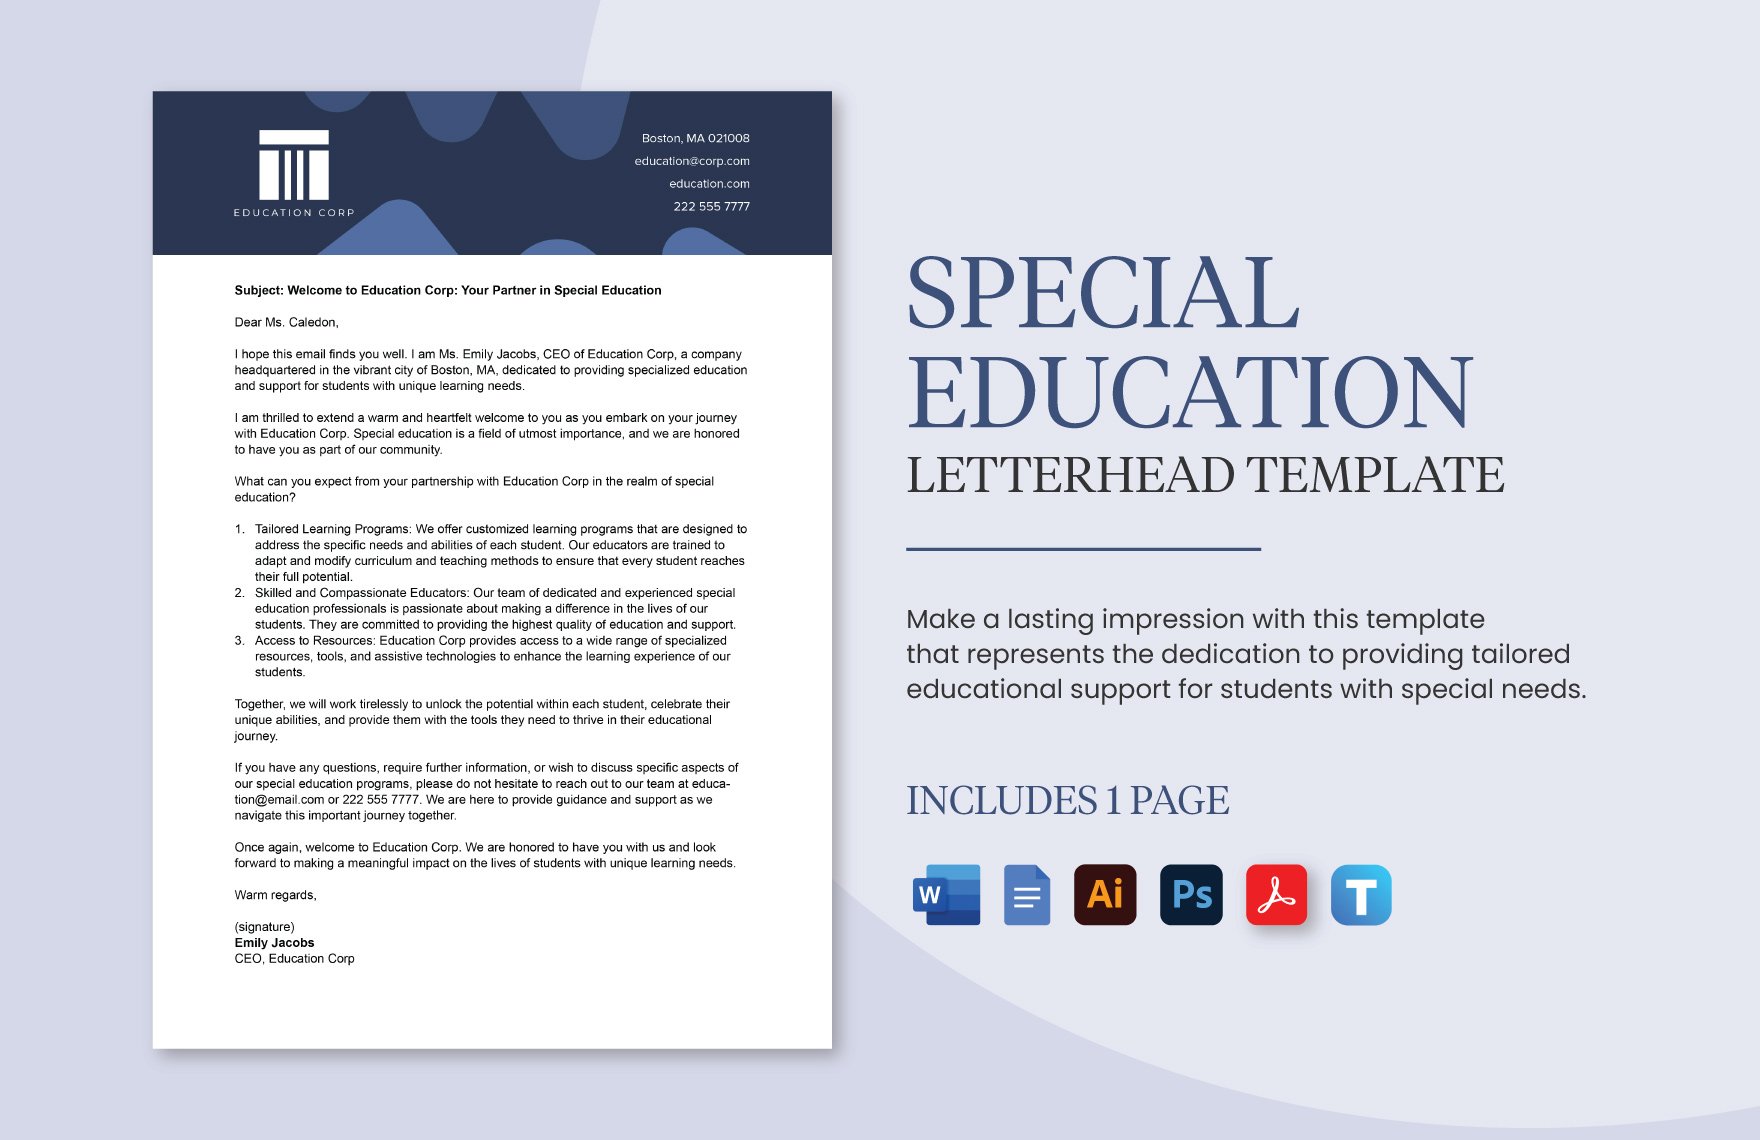 Special Education Letterhead Template in Word, Google Docs, PDF, Illustrator, PSD